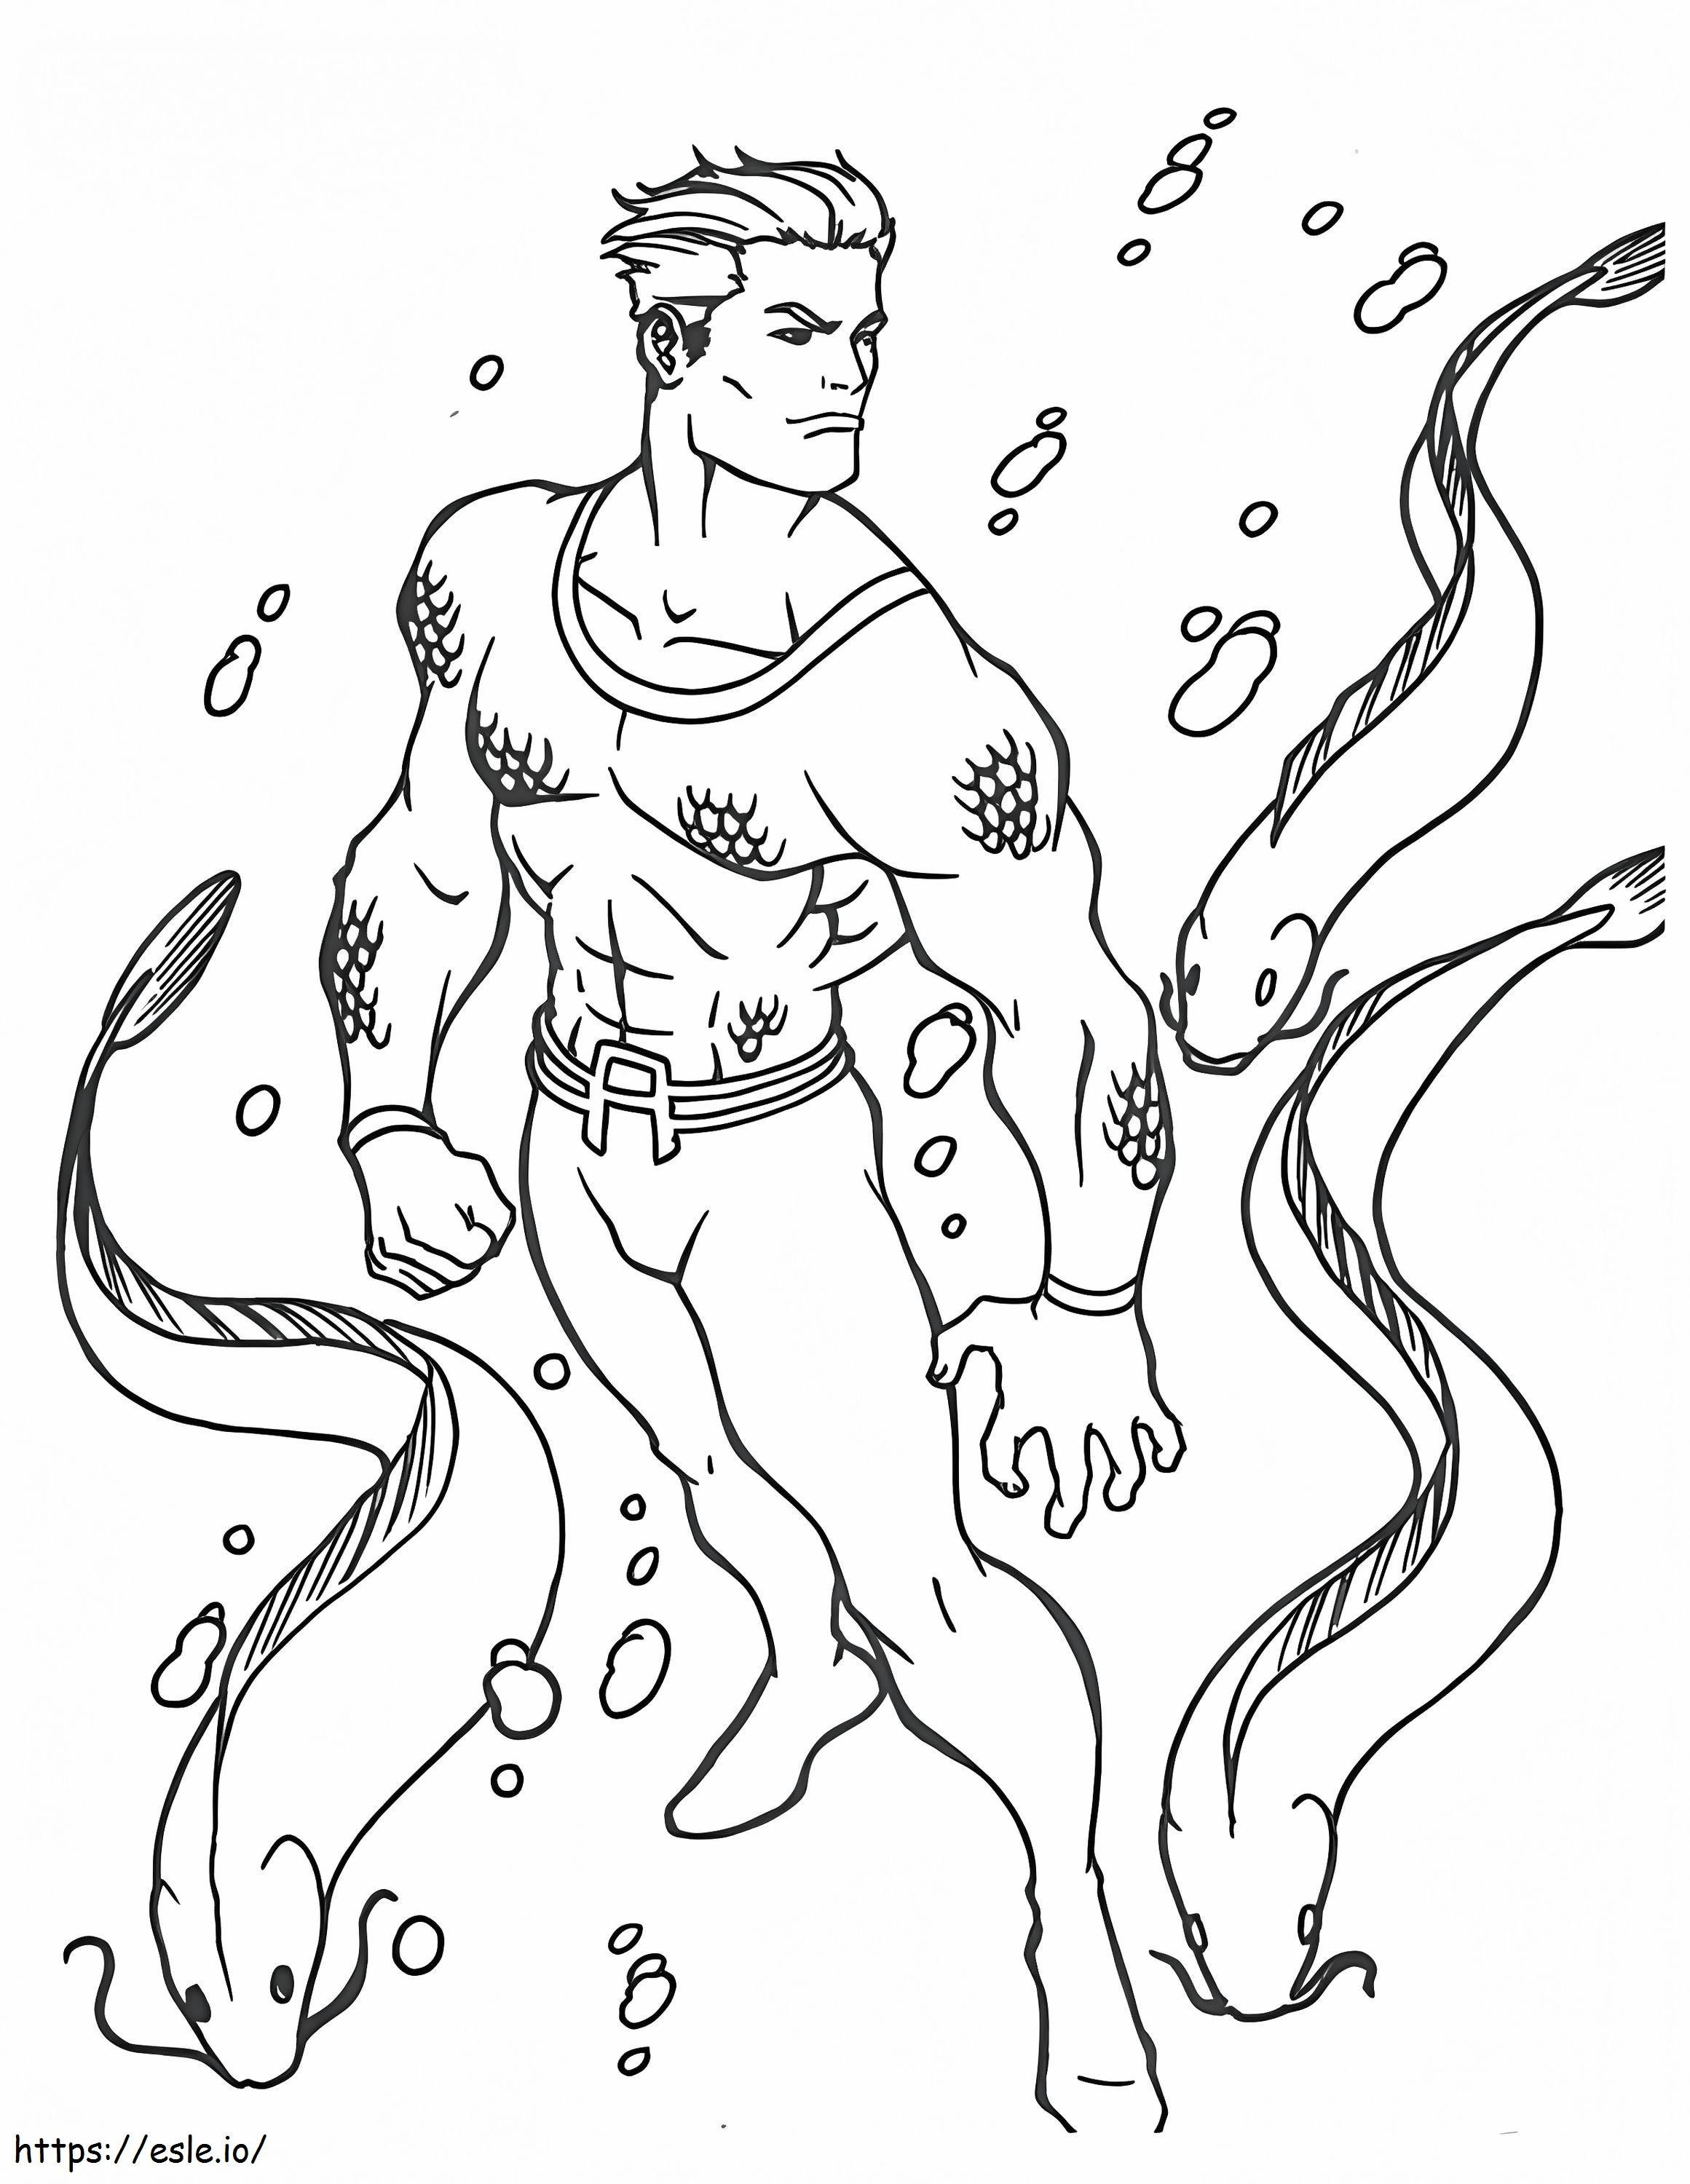 Aquaman 6 kolorowanka